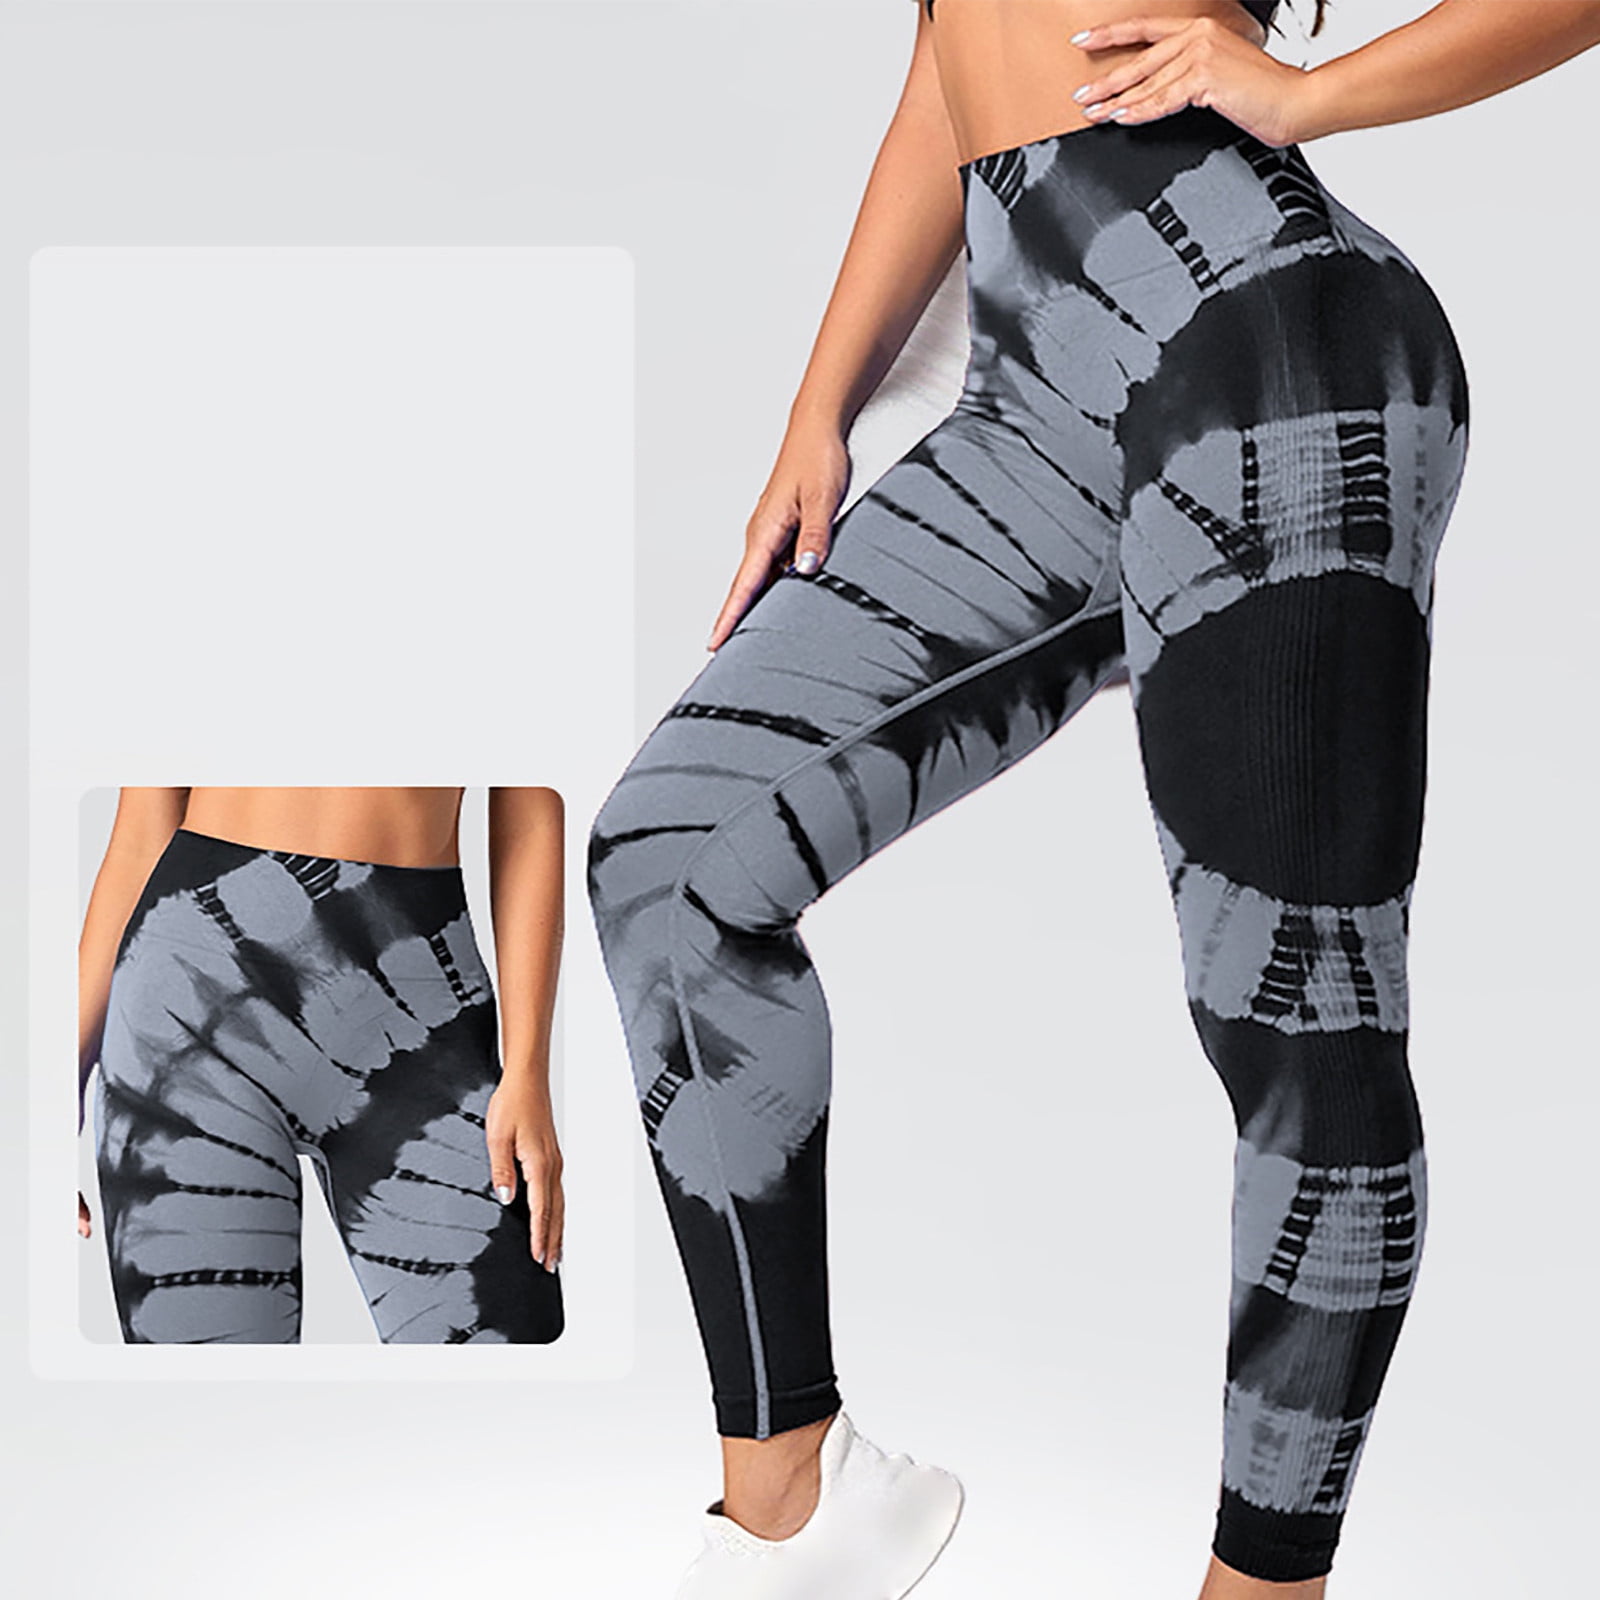 Women High Waist Legging Pants Thread Seamless Floral Print Tight Butt Lift  Shaping Workout Yoga Trousers (L, Gray) 